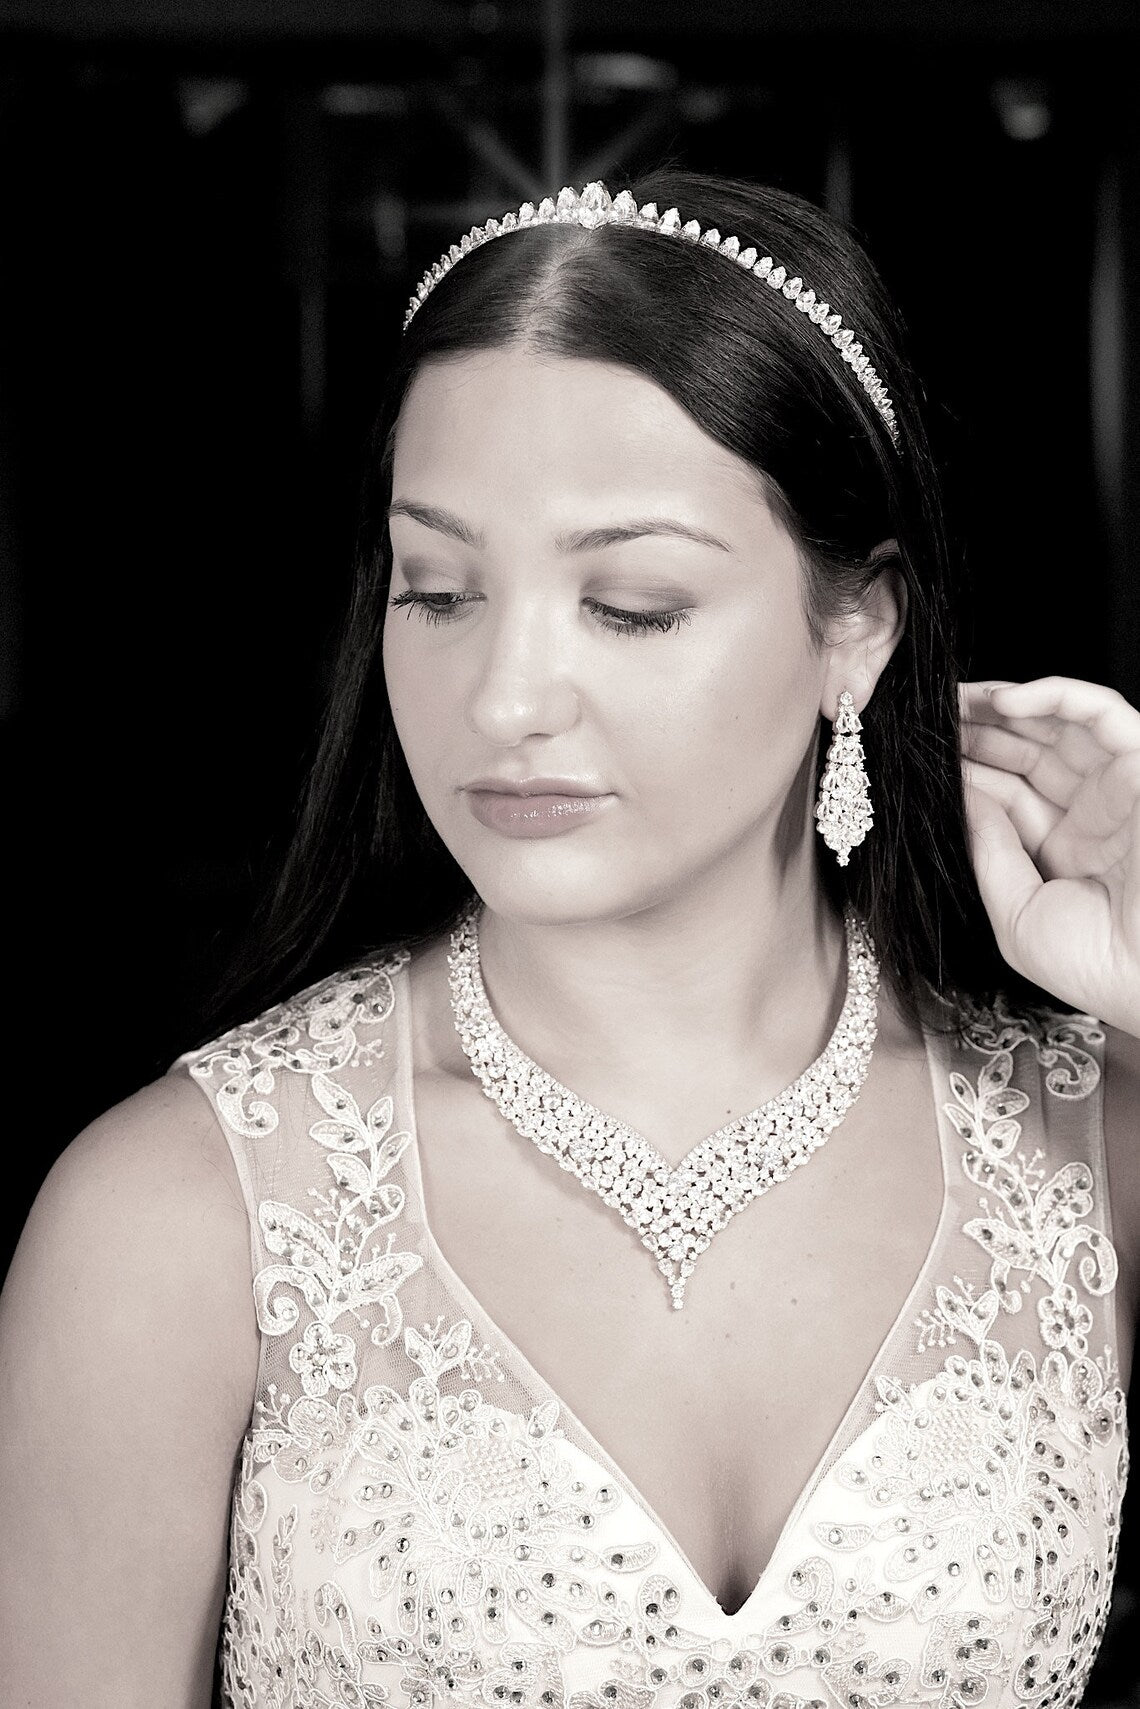 Olivia - Glamorous 3pc set silver crystal necklace set